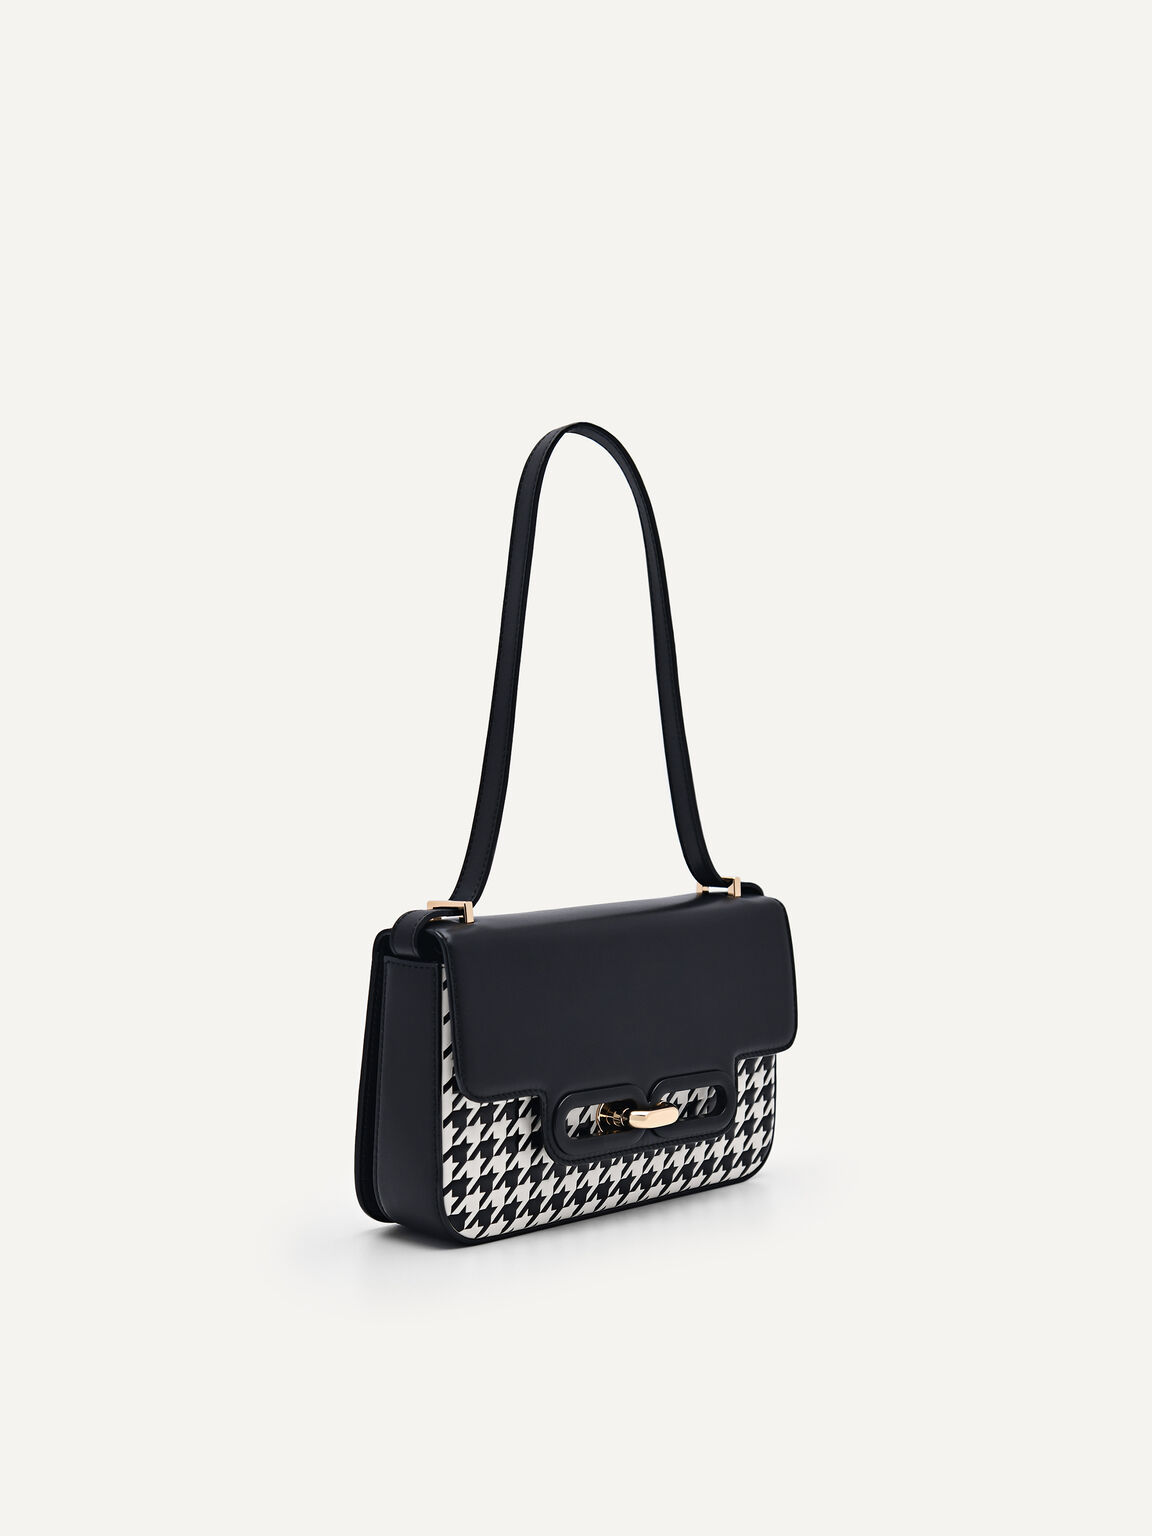 PEDRO Studio Kate Leather Envelope Bag, Black2, hi-res